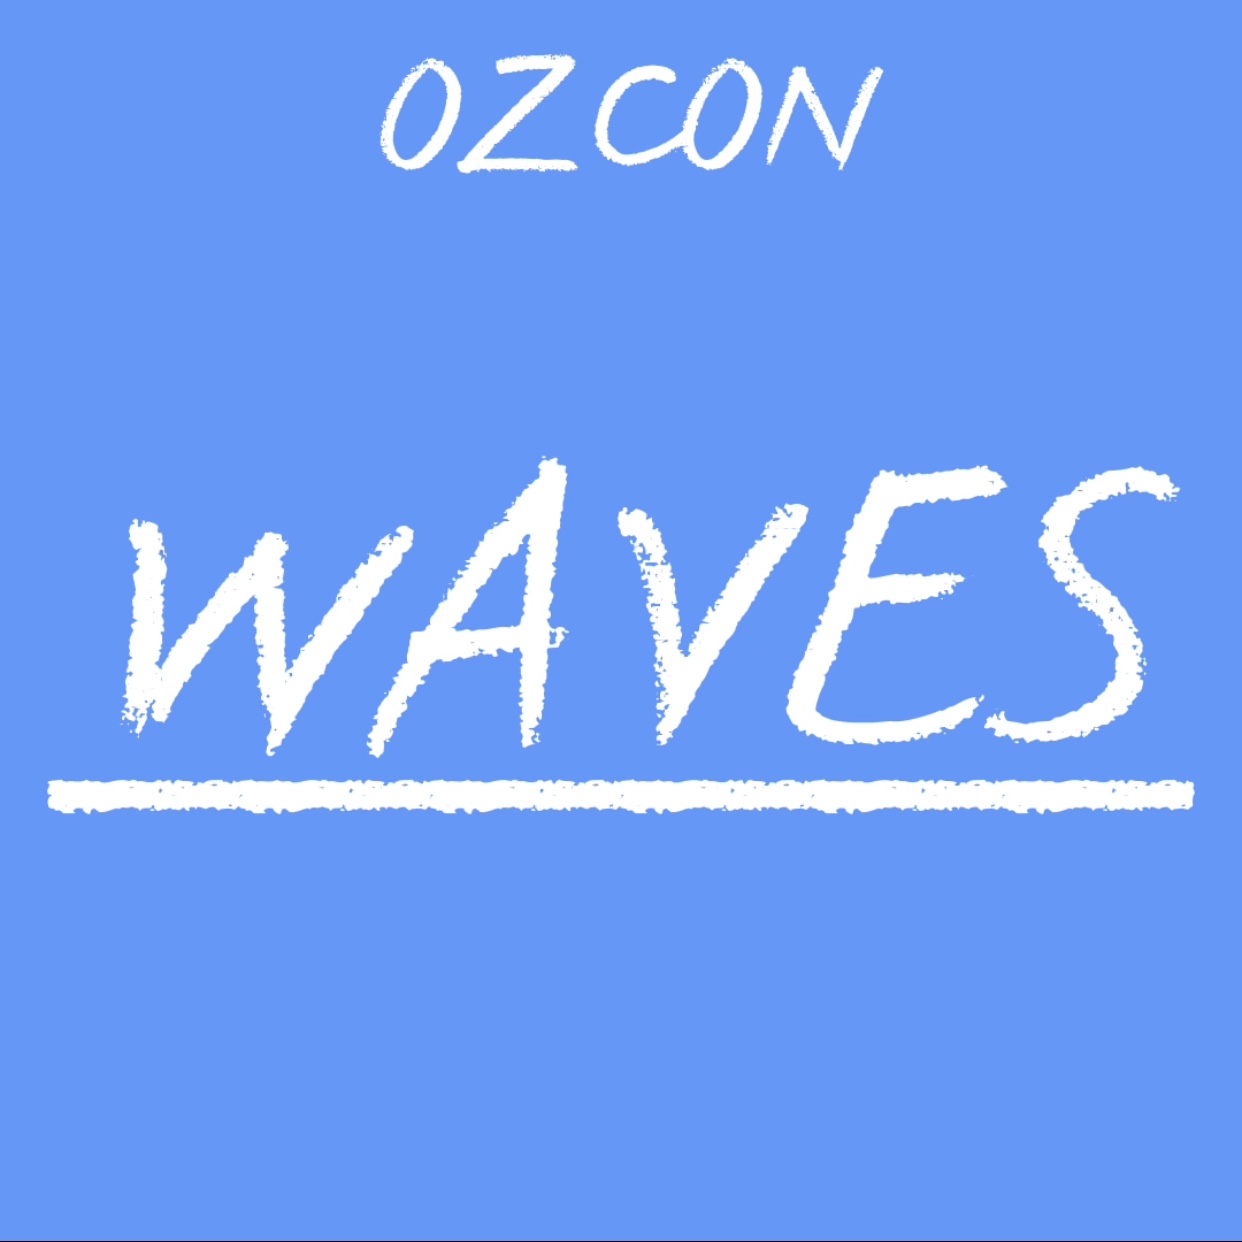 OZCON Waves cover artwork